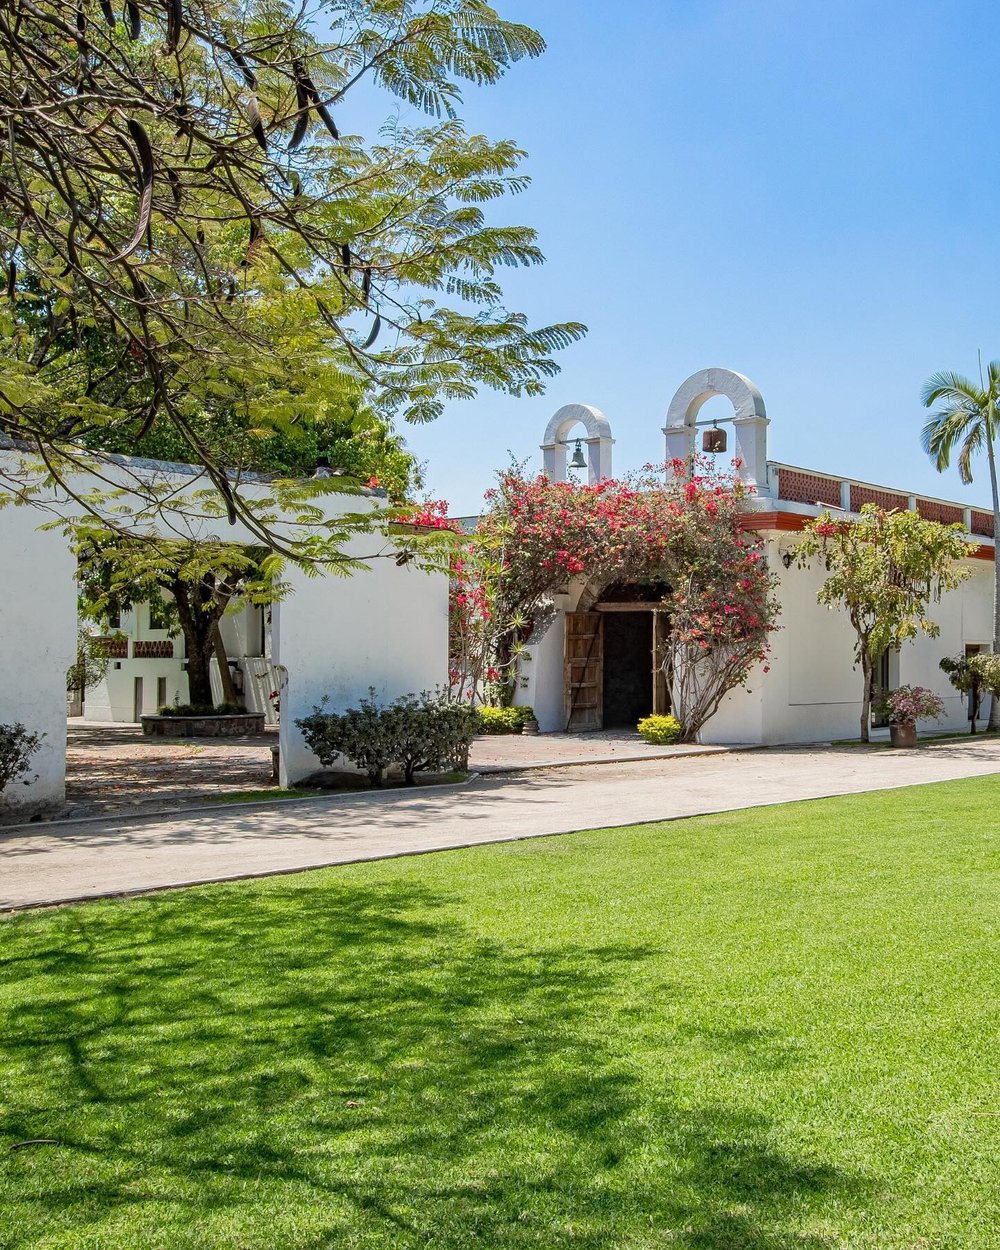 Francis York Mexico Sothebys Historic Landmark Estate in Cuautla, Mexico  00006.jpg